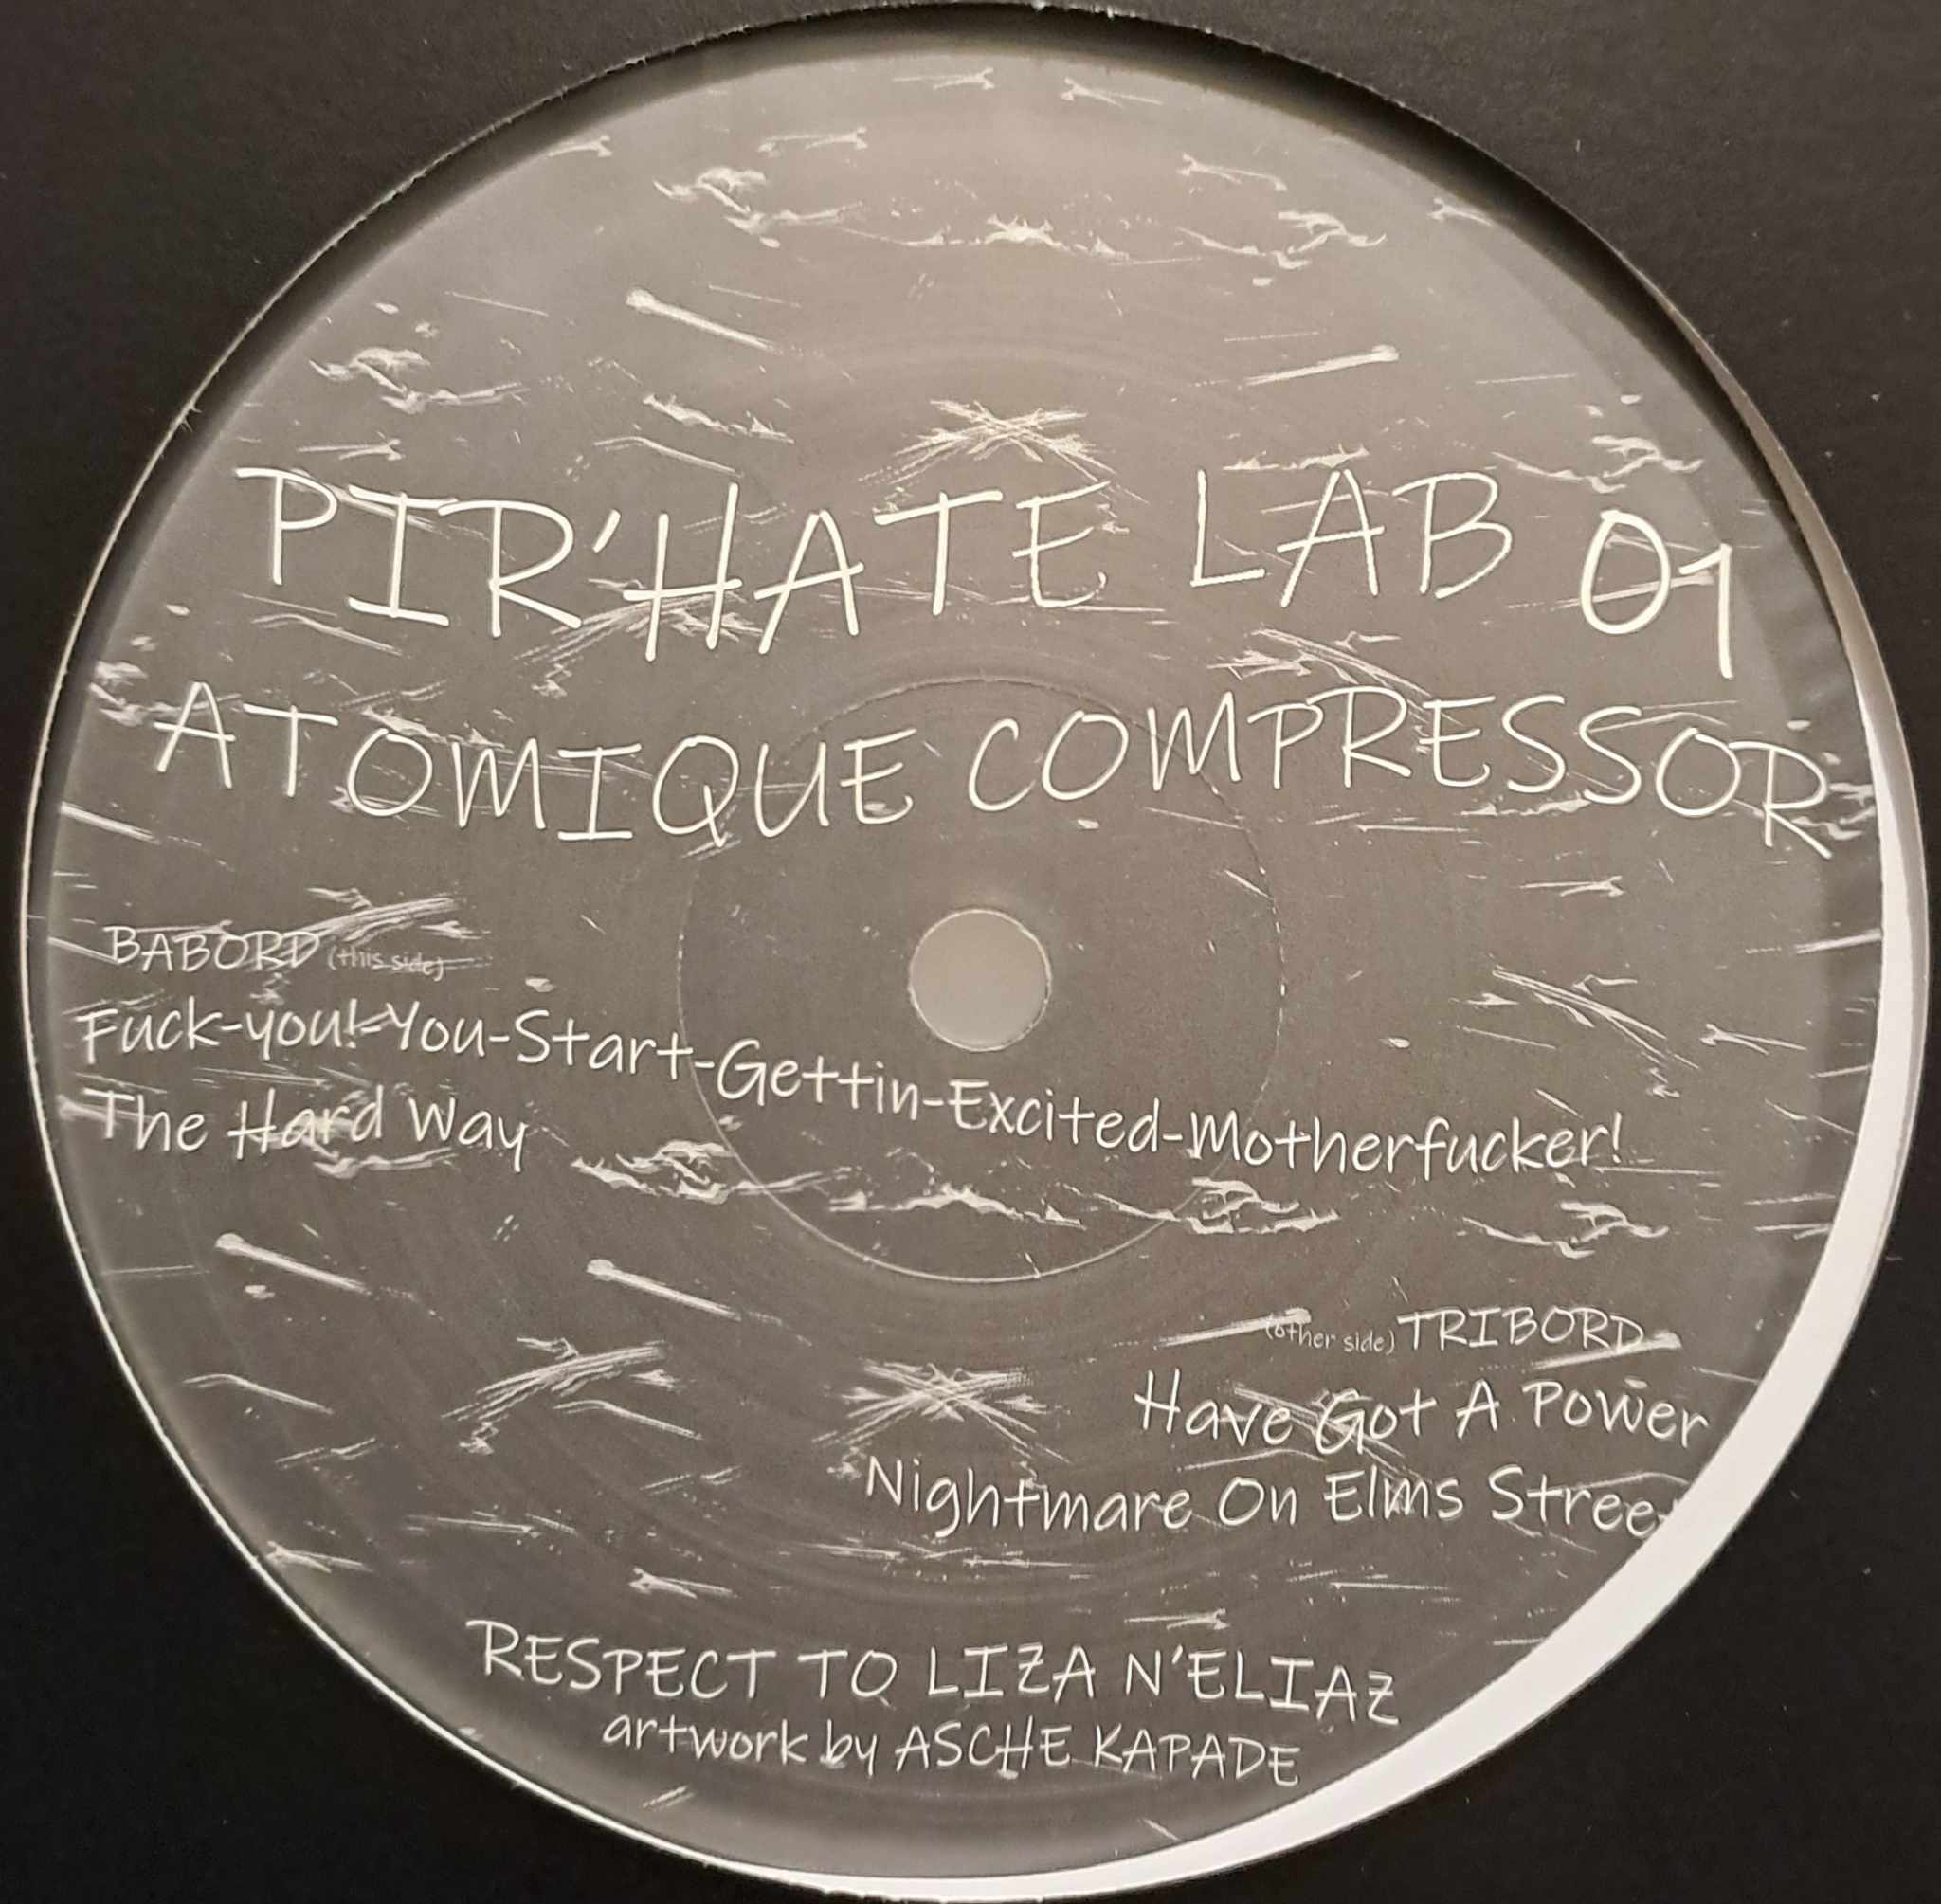 Pir'Hate Lab 01 - vinyle hardcore